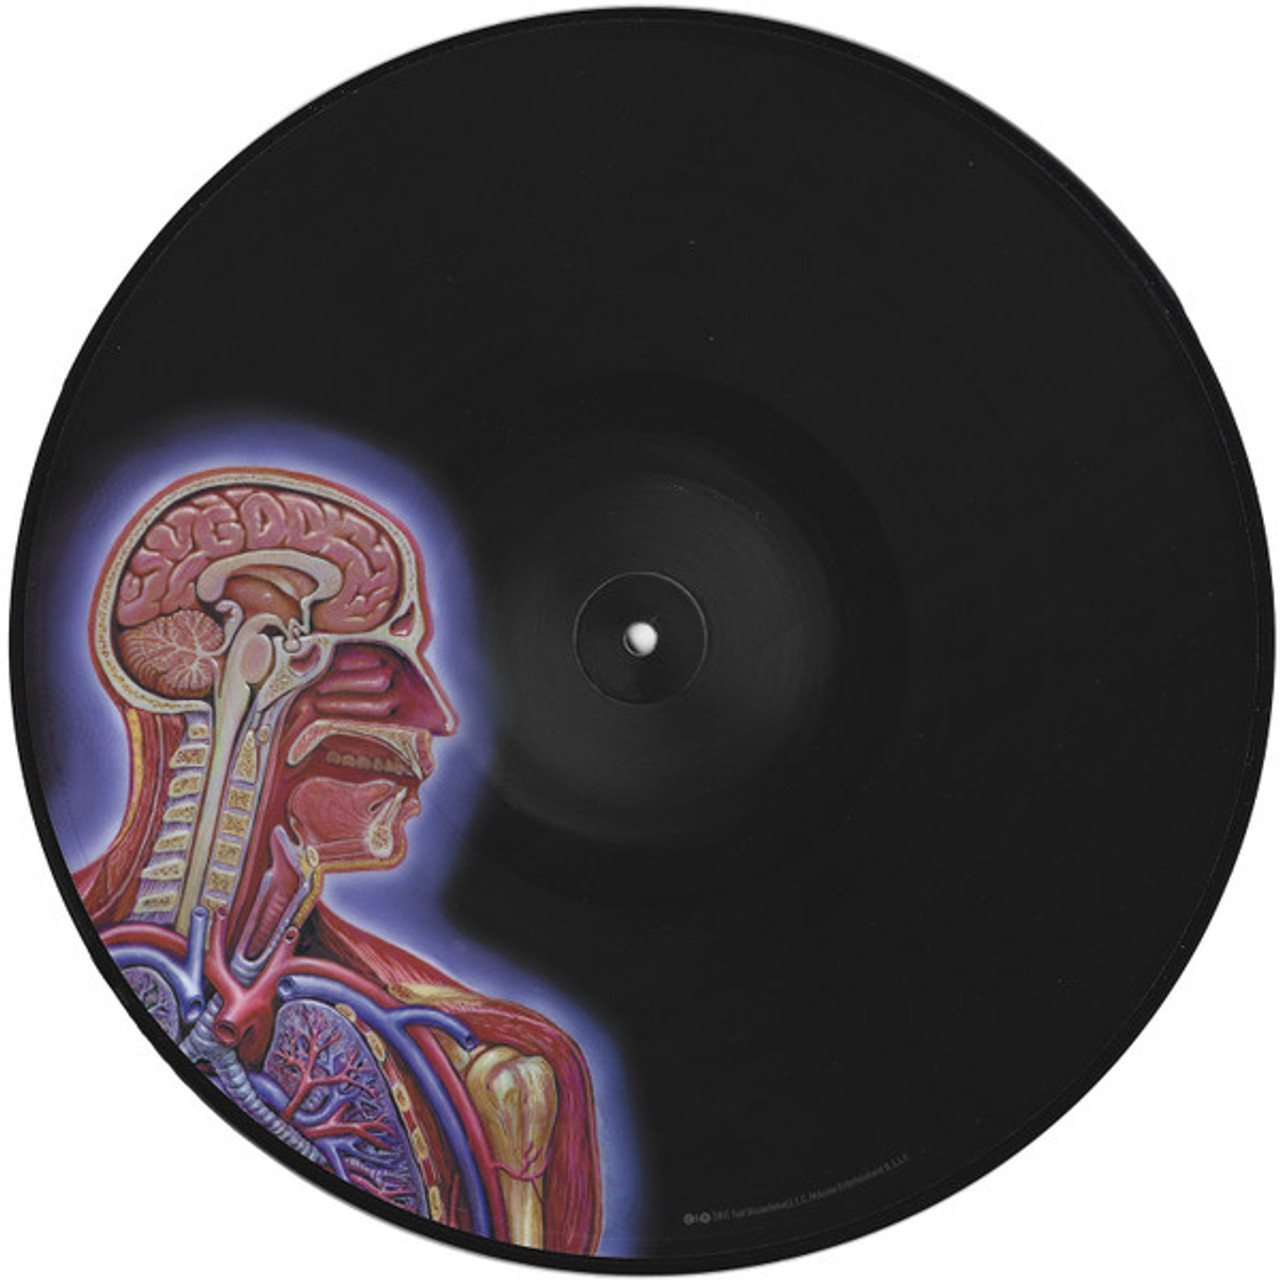 Tool - Lateralus (2x Picture Disc Vinyl LP)